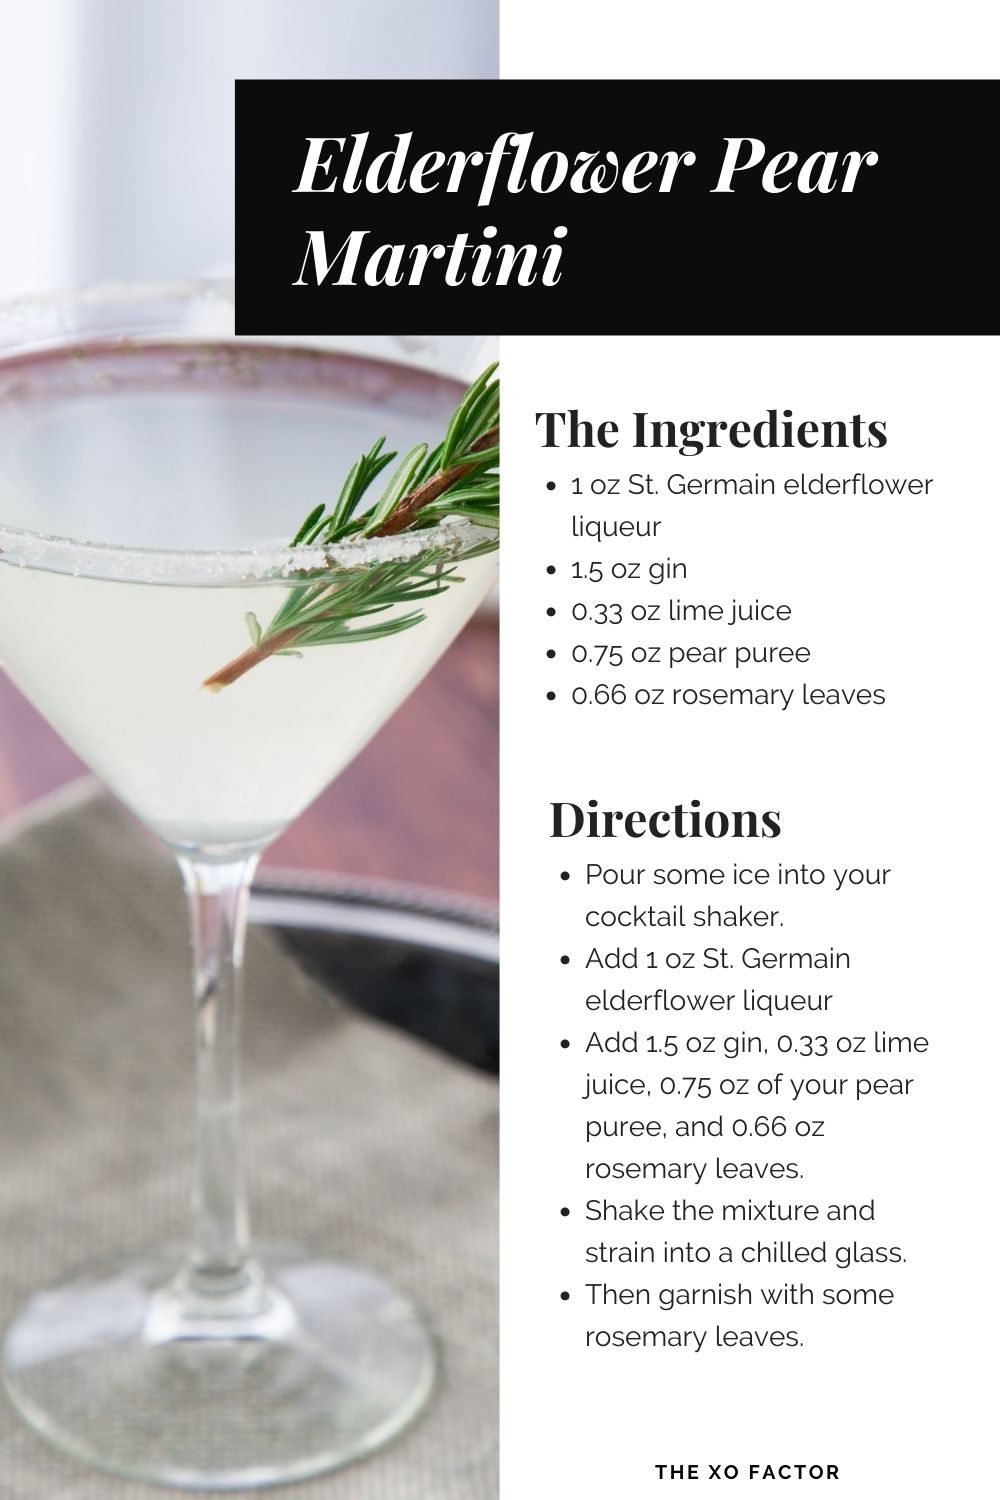 elderflower pear martini recipe